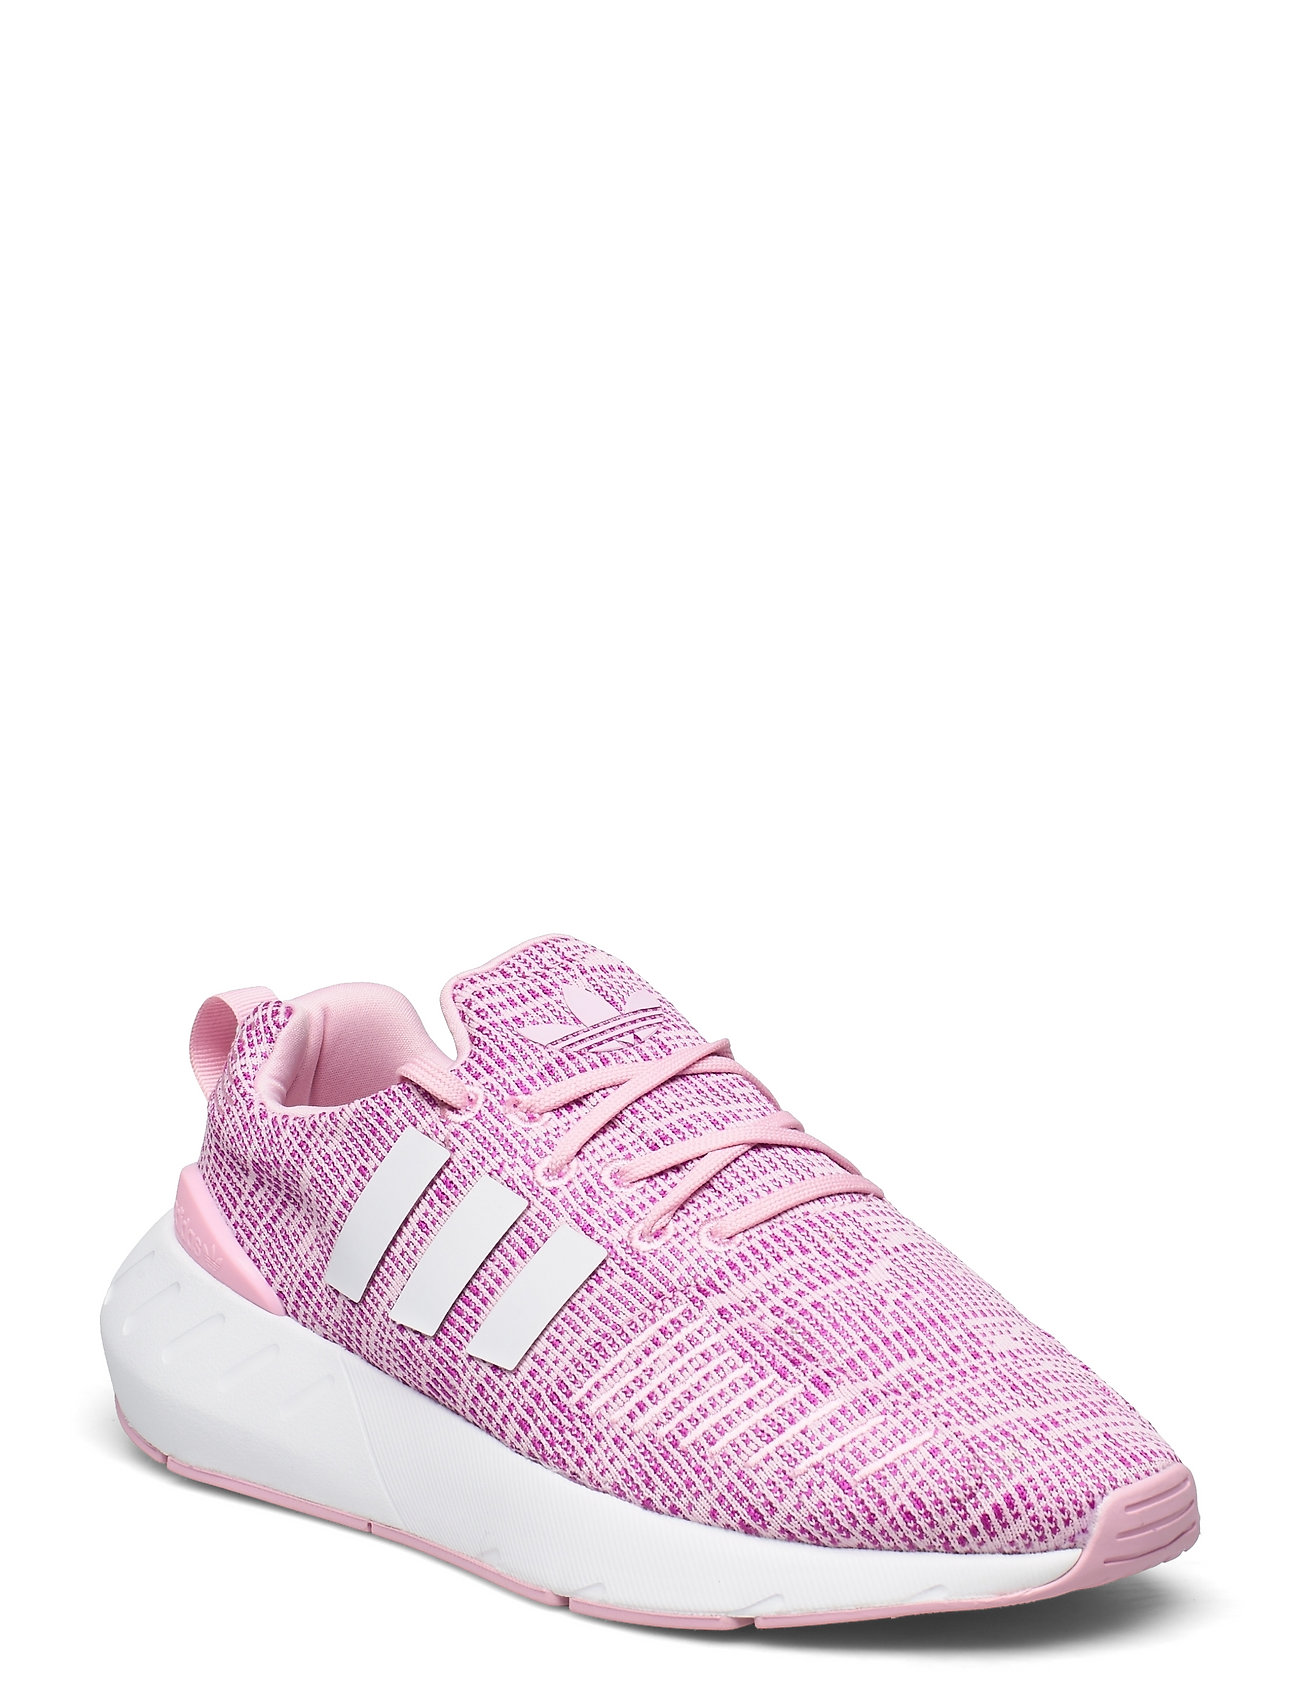 "adidas Originals" "Swift Run 22 Shoes Low-top Sneakers Pink Adidas